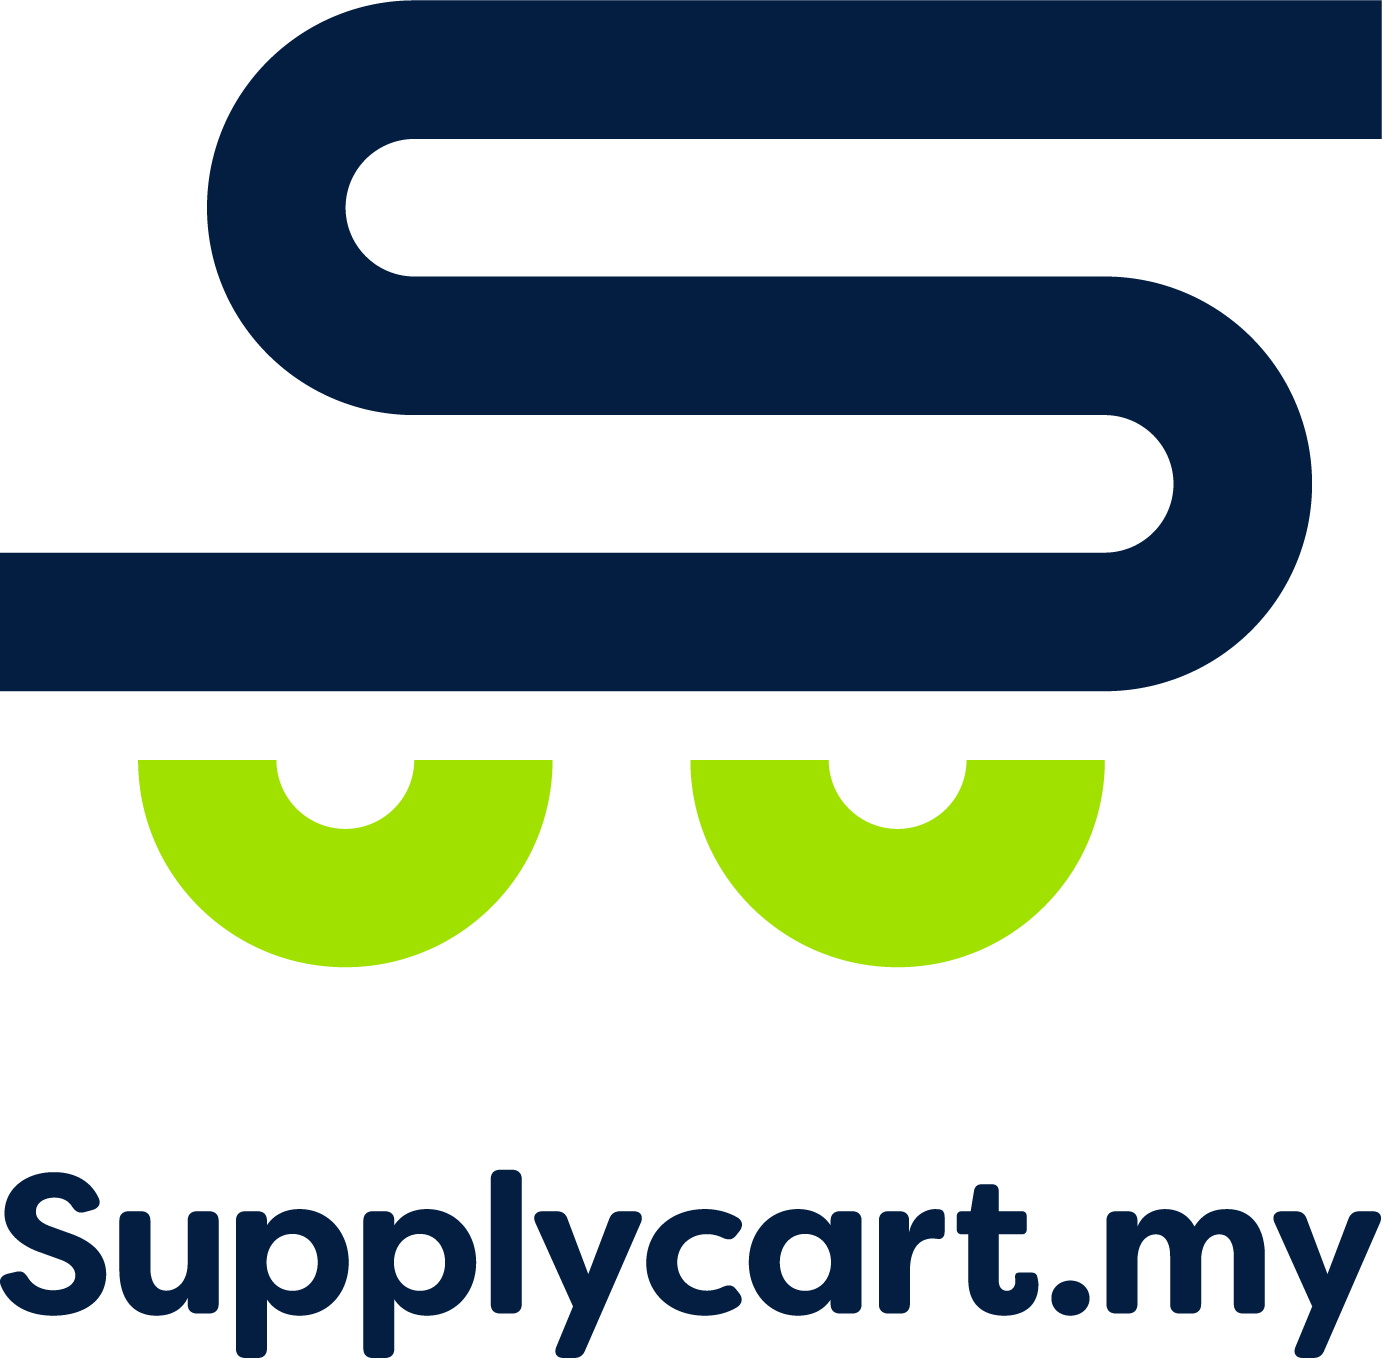 Supplycart